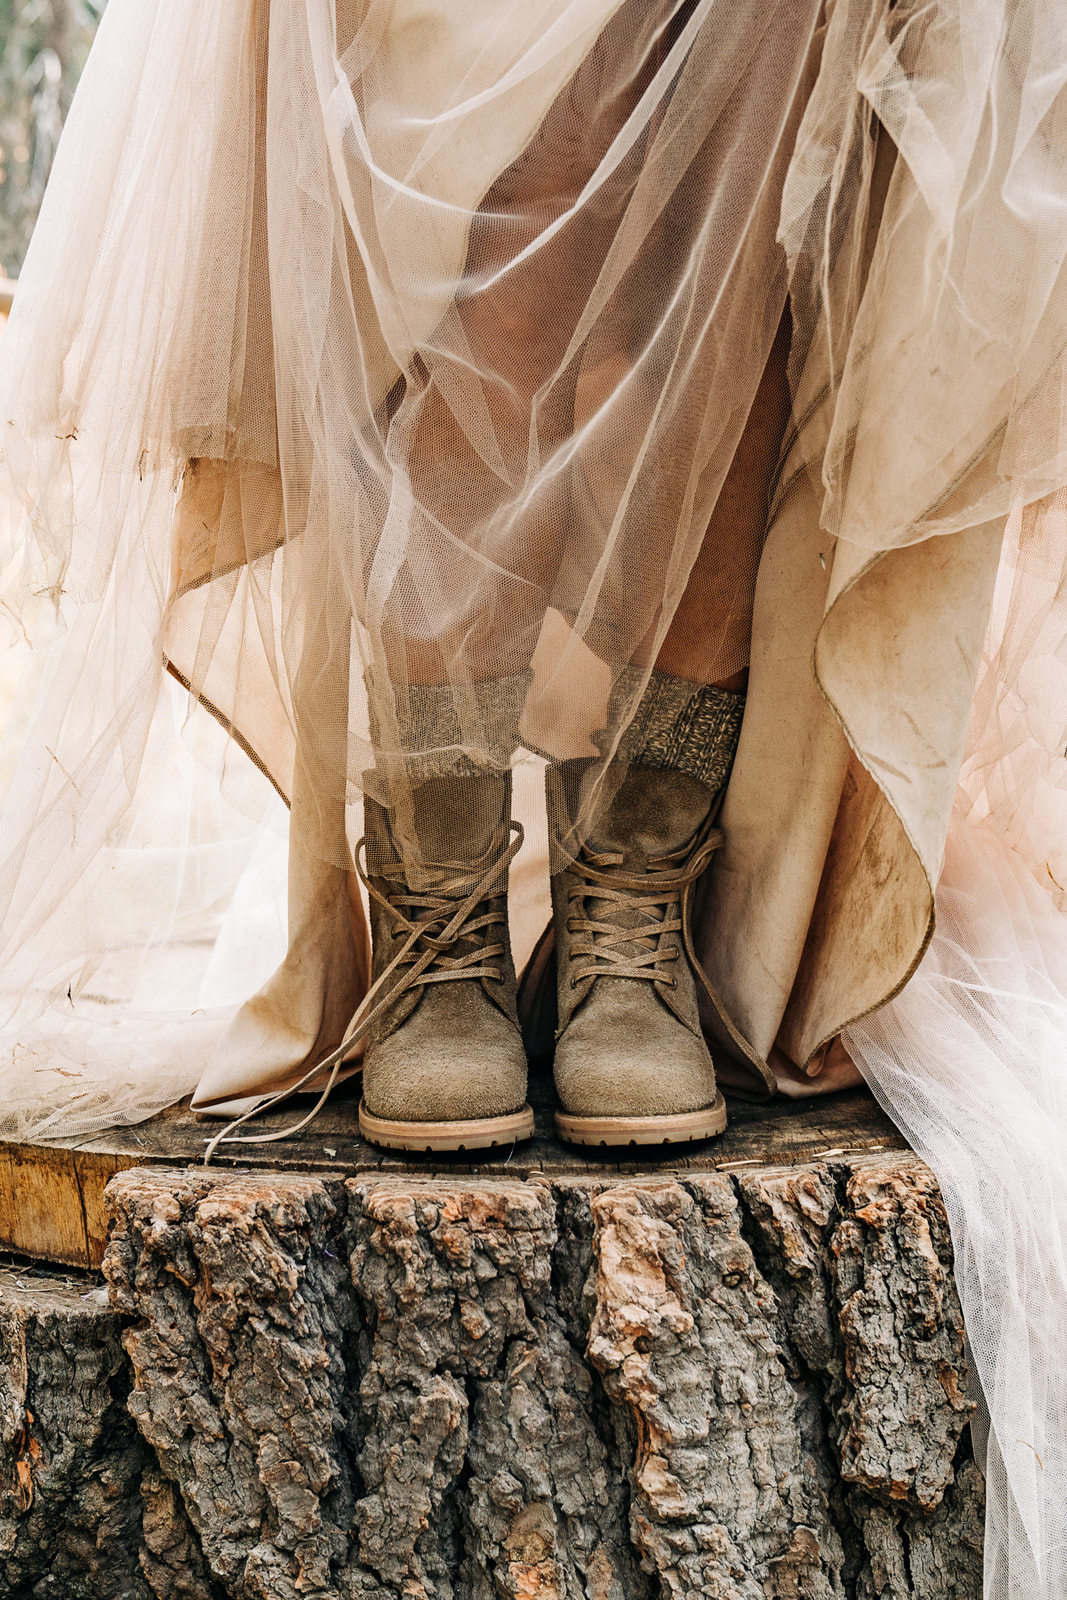 Bridal boots for adventure elopement